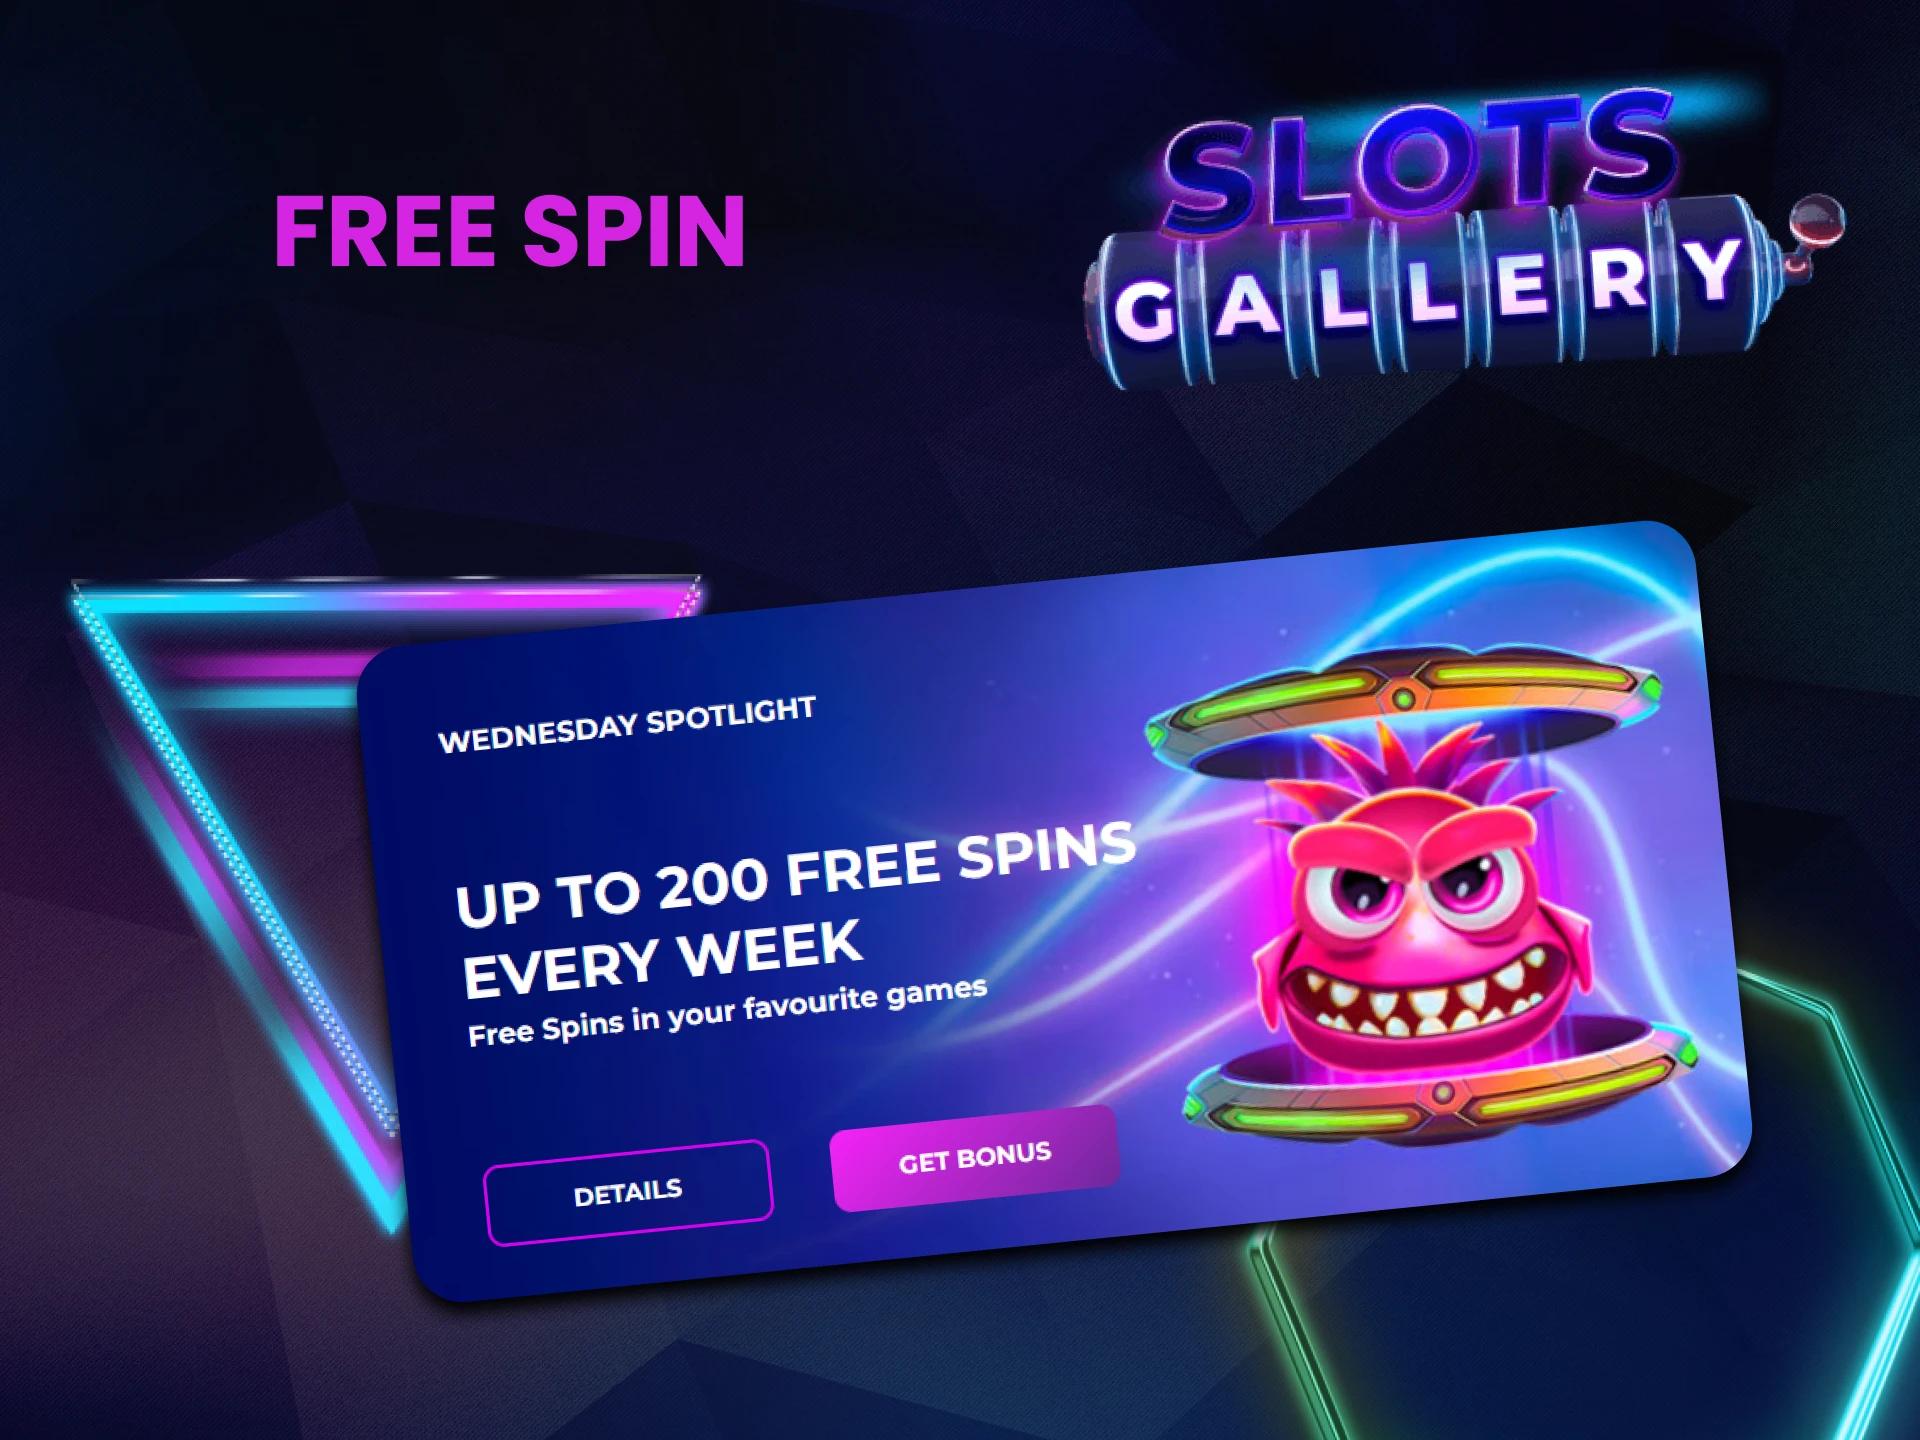 SlotsGallery gives bonus free spins.